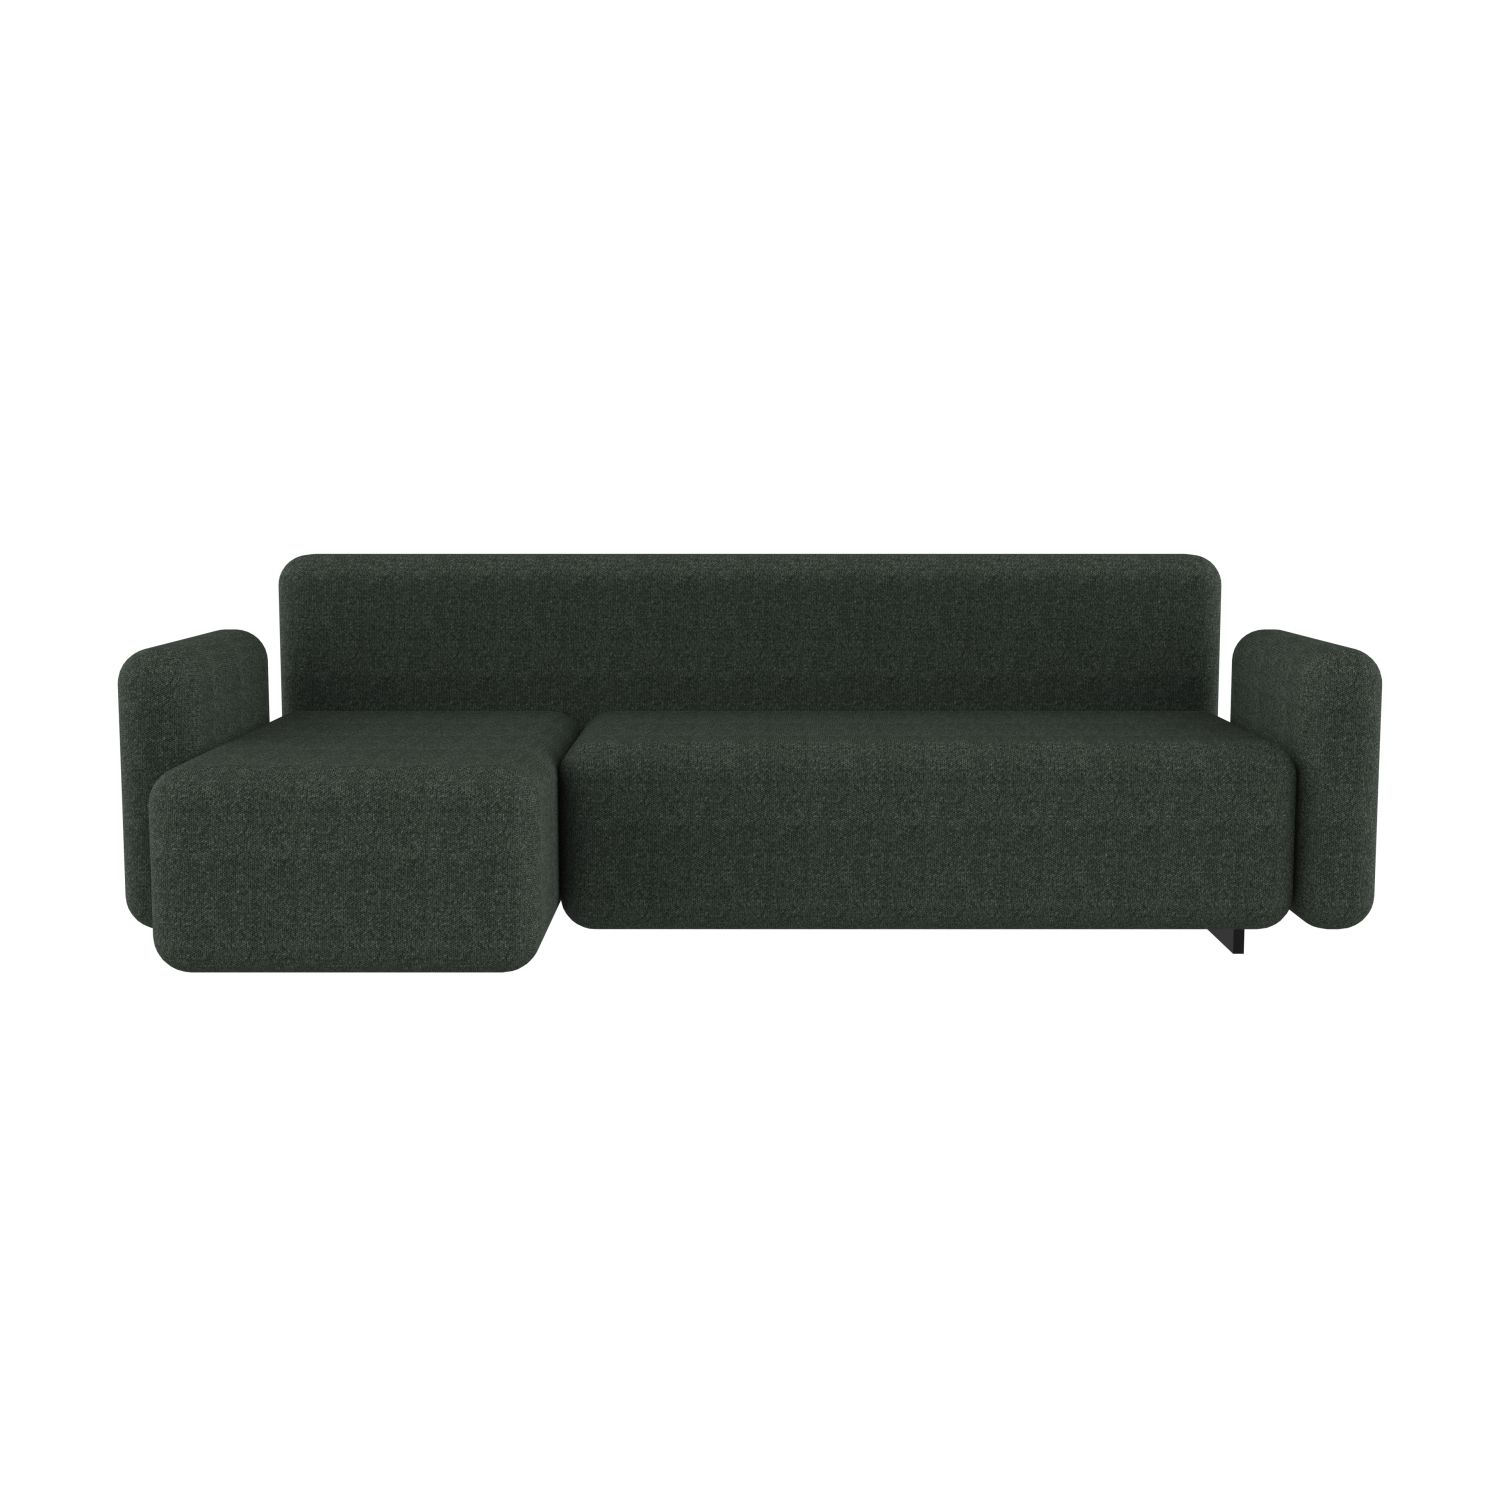 lensvelt fabio novembre balance lounger left with armrest moss summer green 38 black ral9005